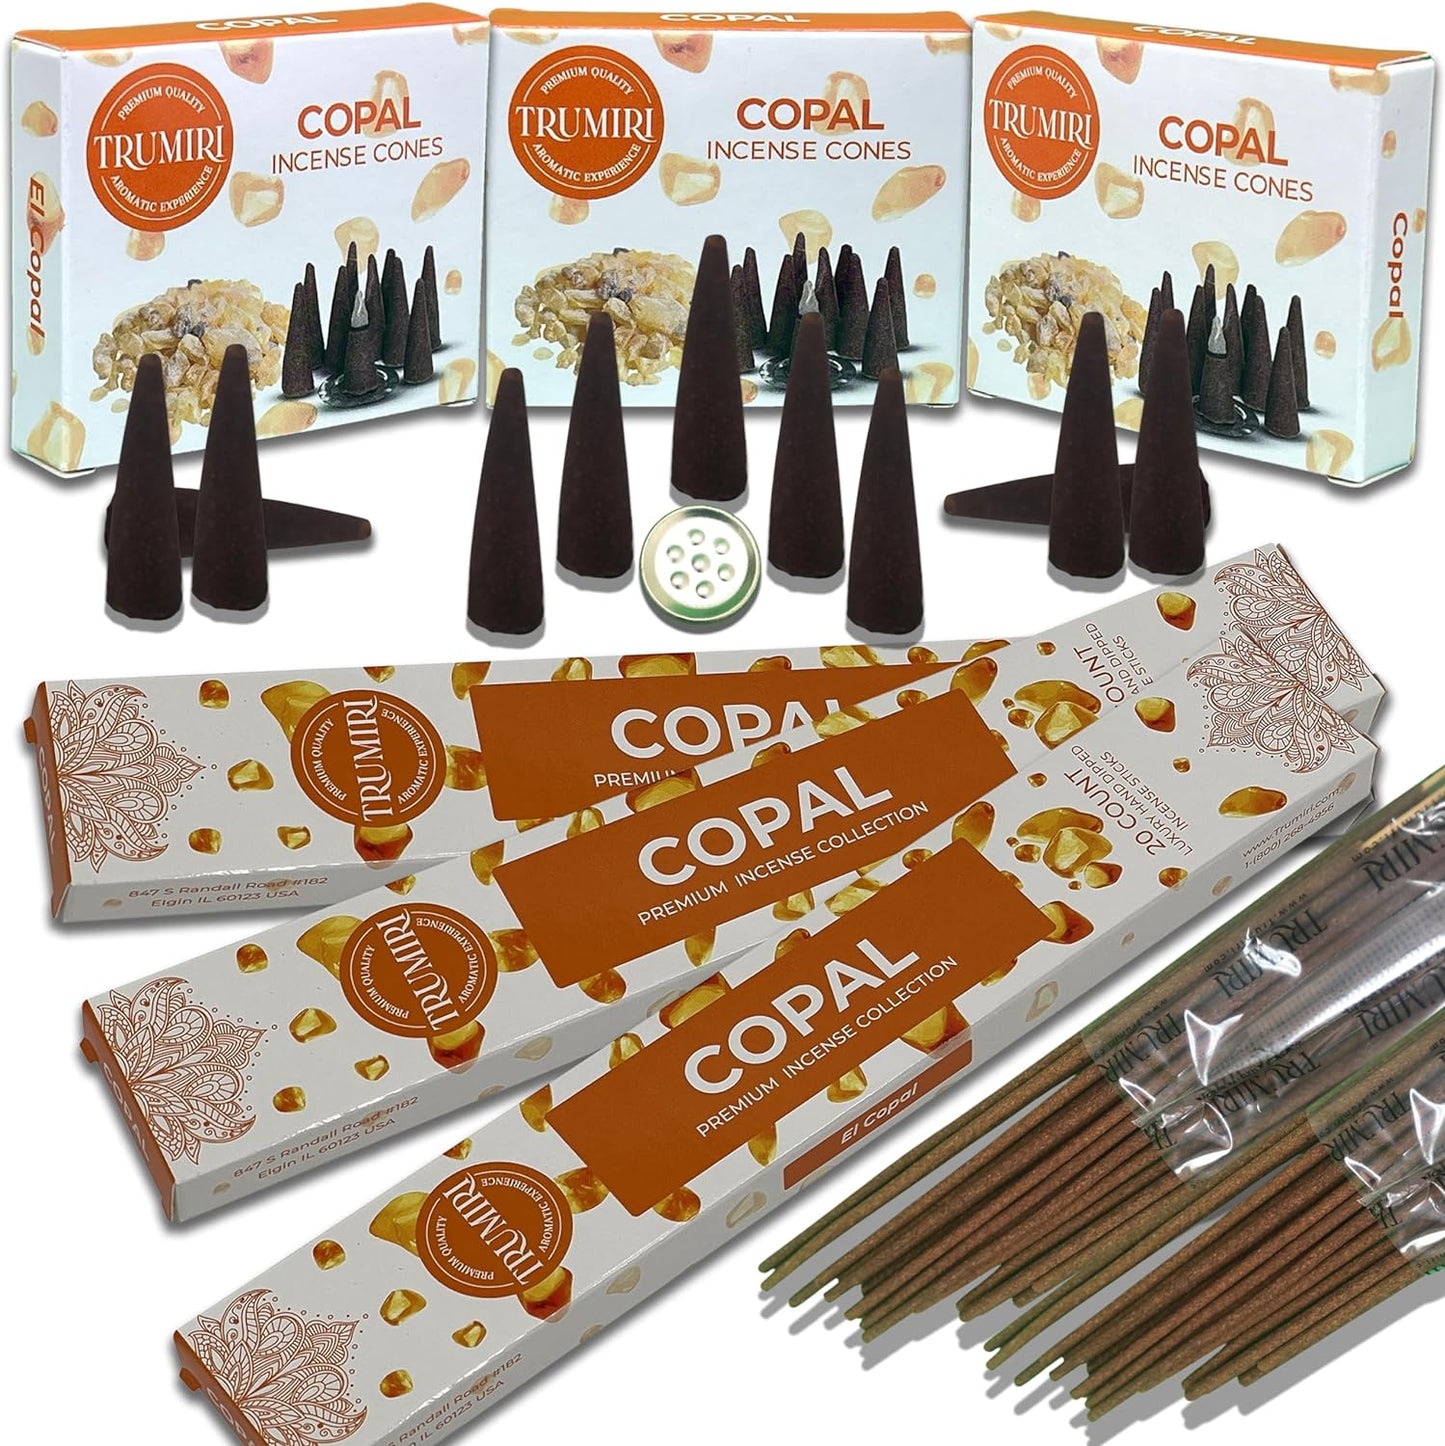 Trumiri Incense Sticks and Cones Combo Pack - Total 60 Sticks and 30 Incense Cones